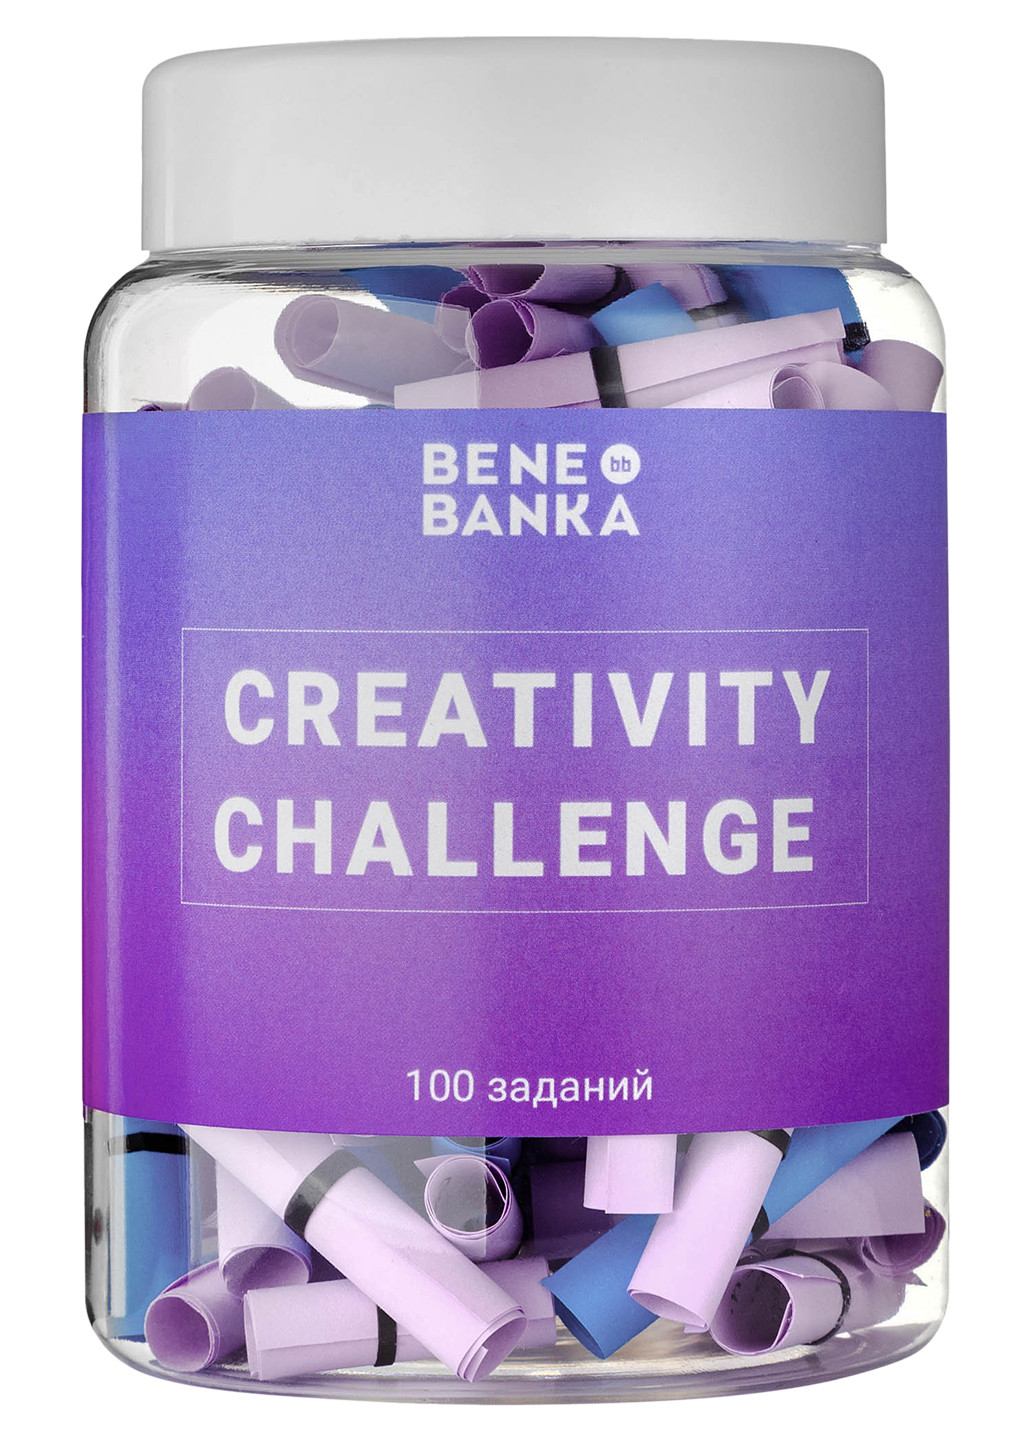 Баночка с заданиями "Creativity Challenge" русский язык Bene Banka (200653604)